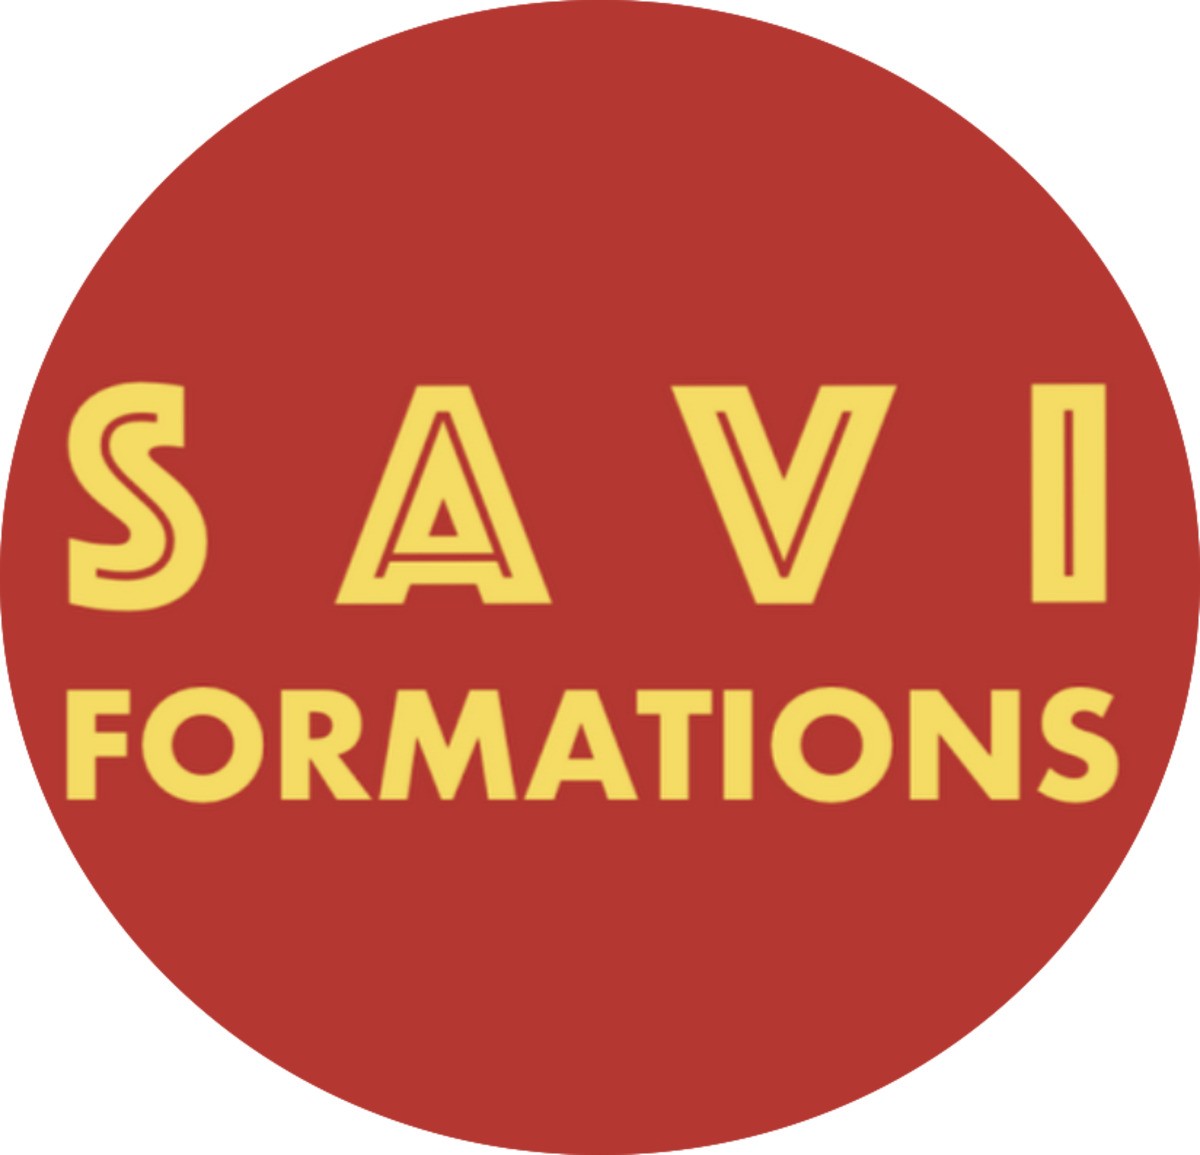 SAVI FORMATIONS